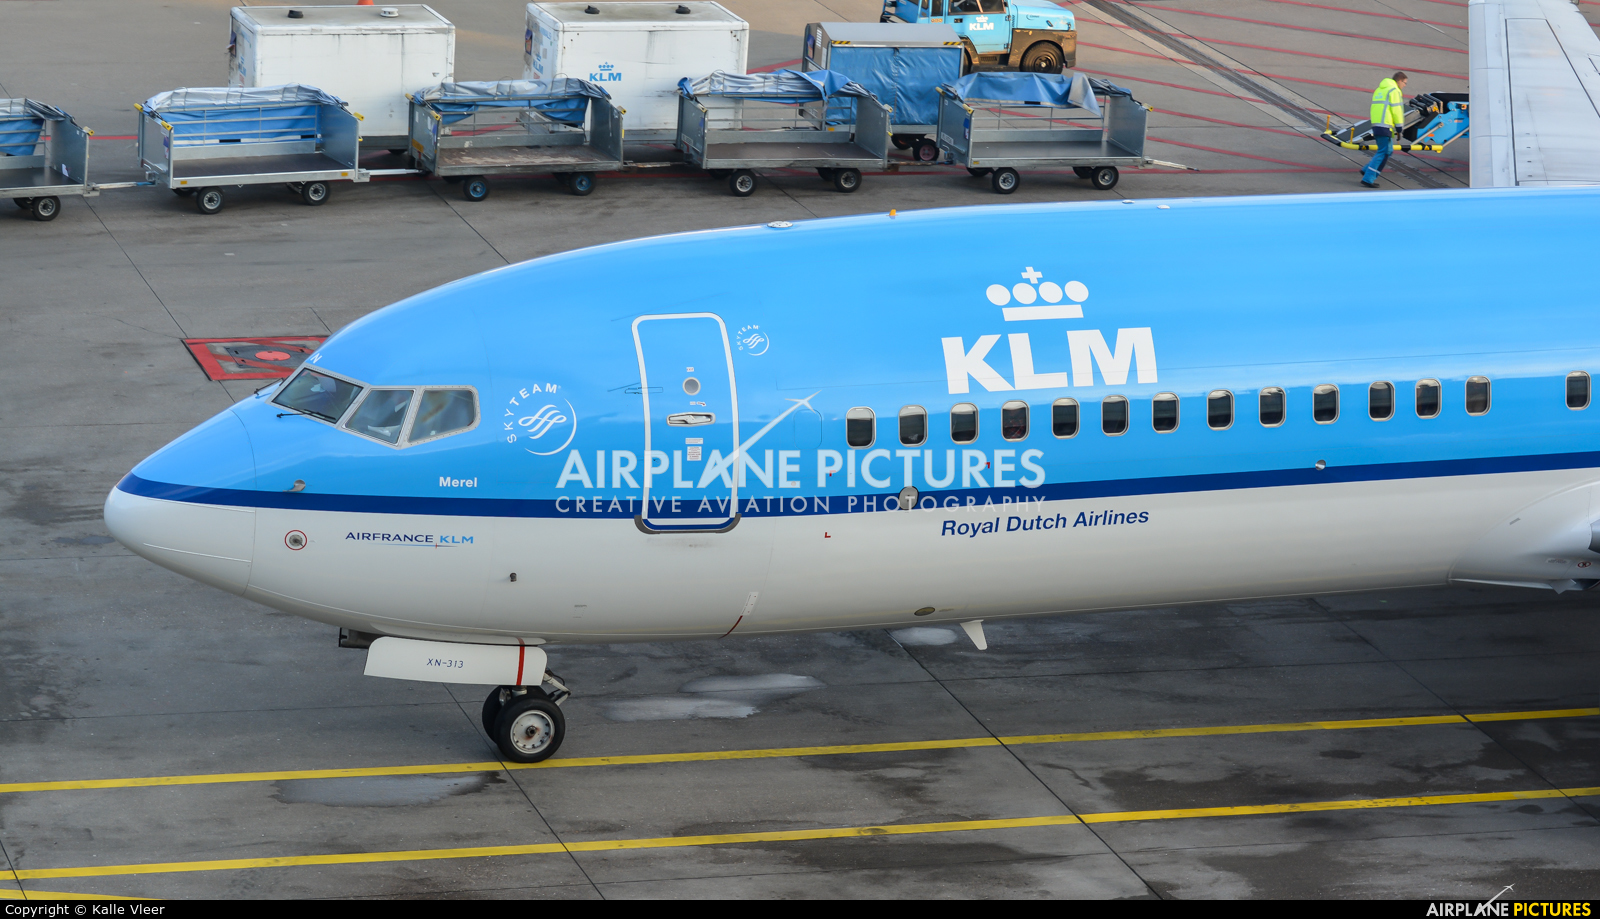 KLM PH-BXN aircraft at Amsterdam - Schiphol